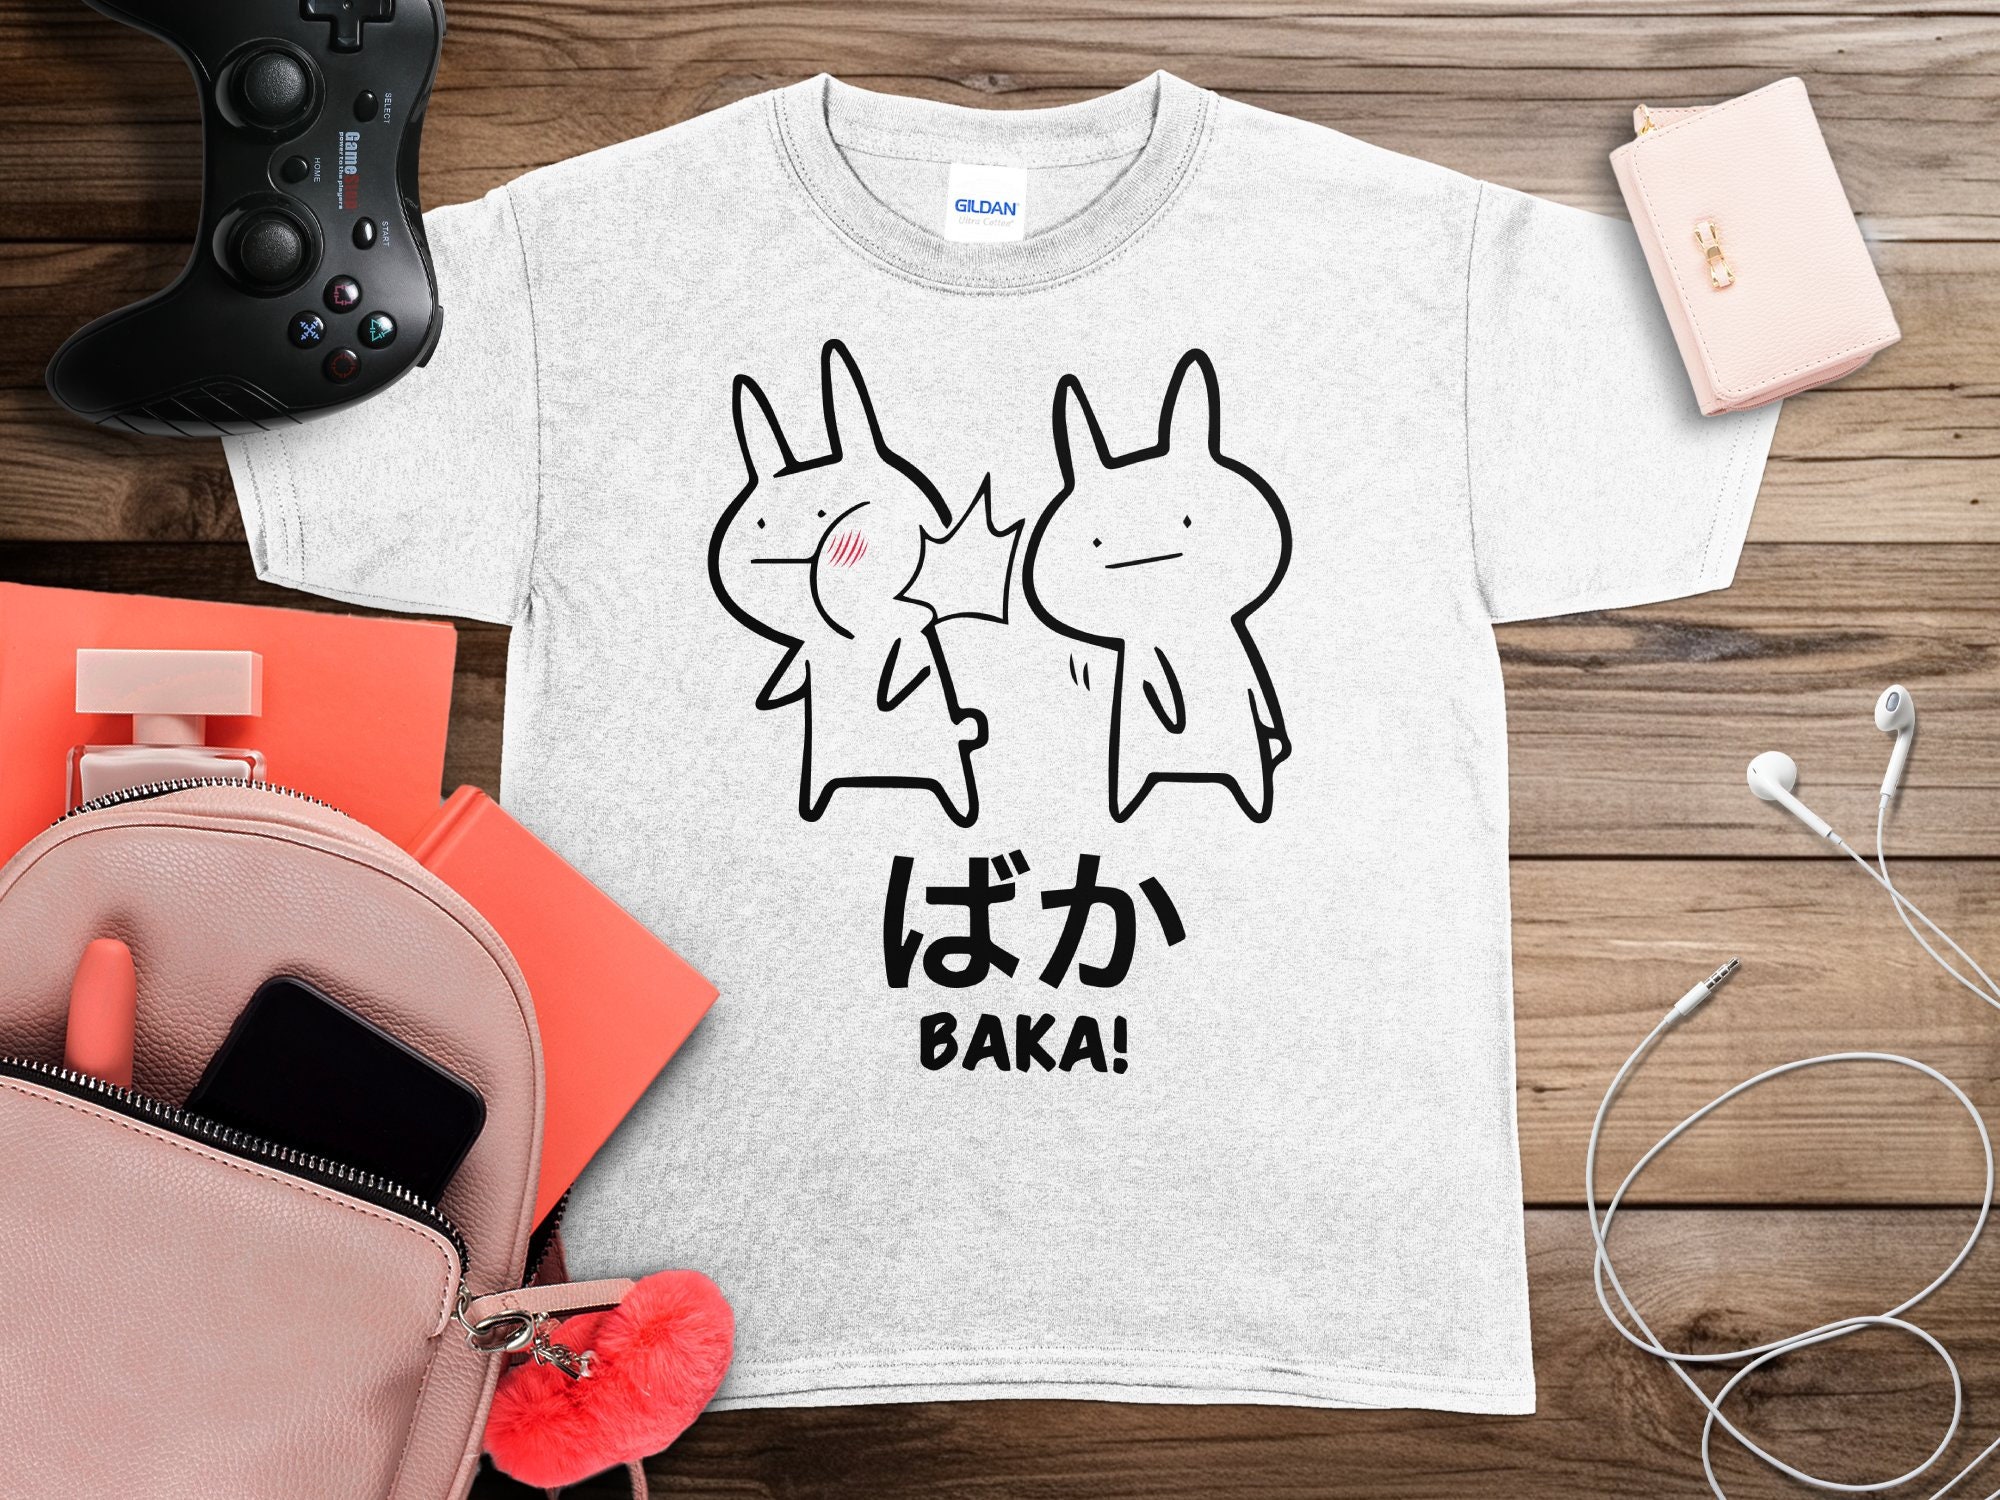  Sussy Baka Funny Meme Japanese Meaning Fool Gamer Kids Lover  Raglan Baseball Tee : Clothing, Shoes & Jewelry